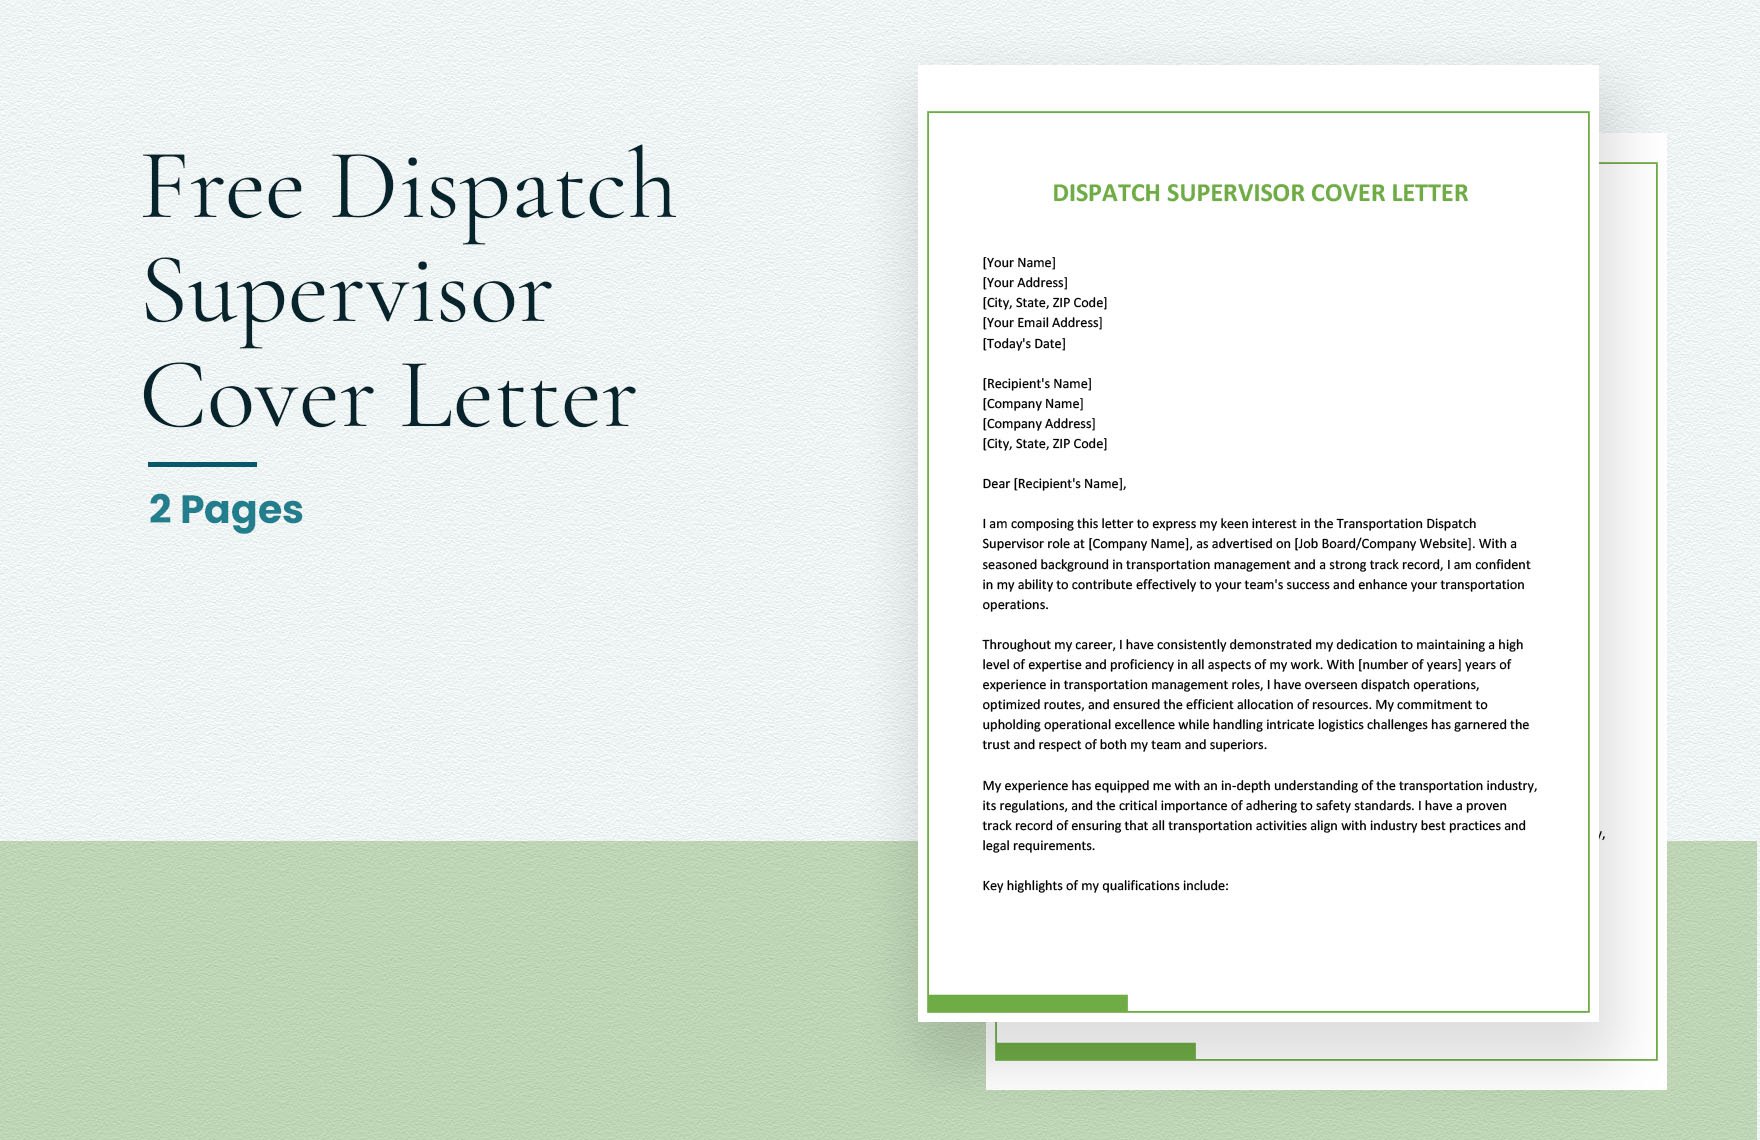 Dispatch Supervisor Cover Letter in Word, Google Docs